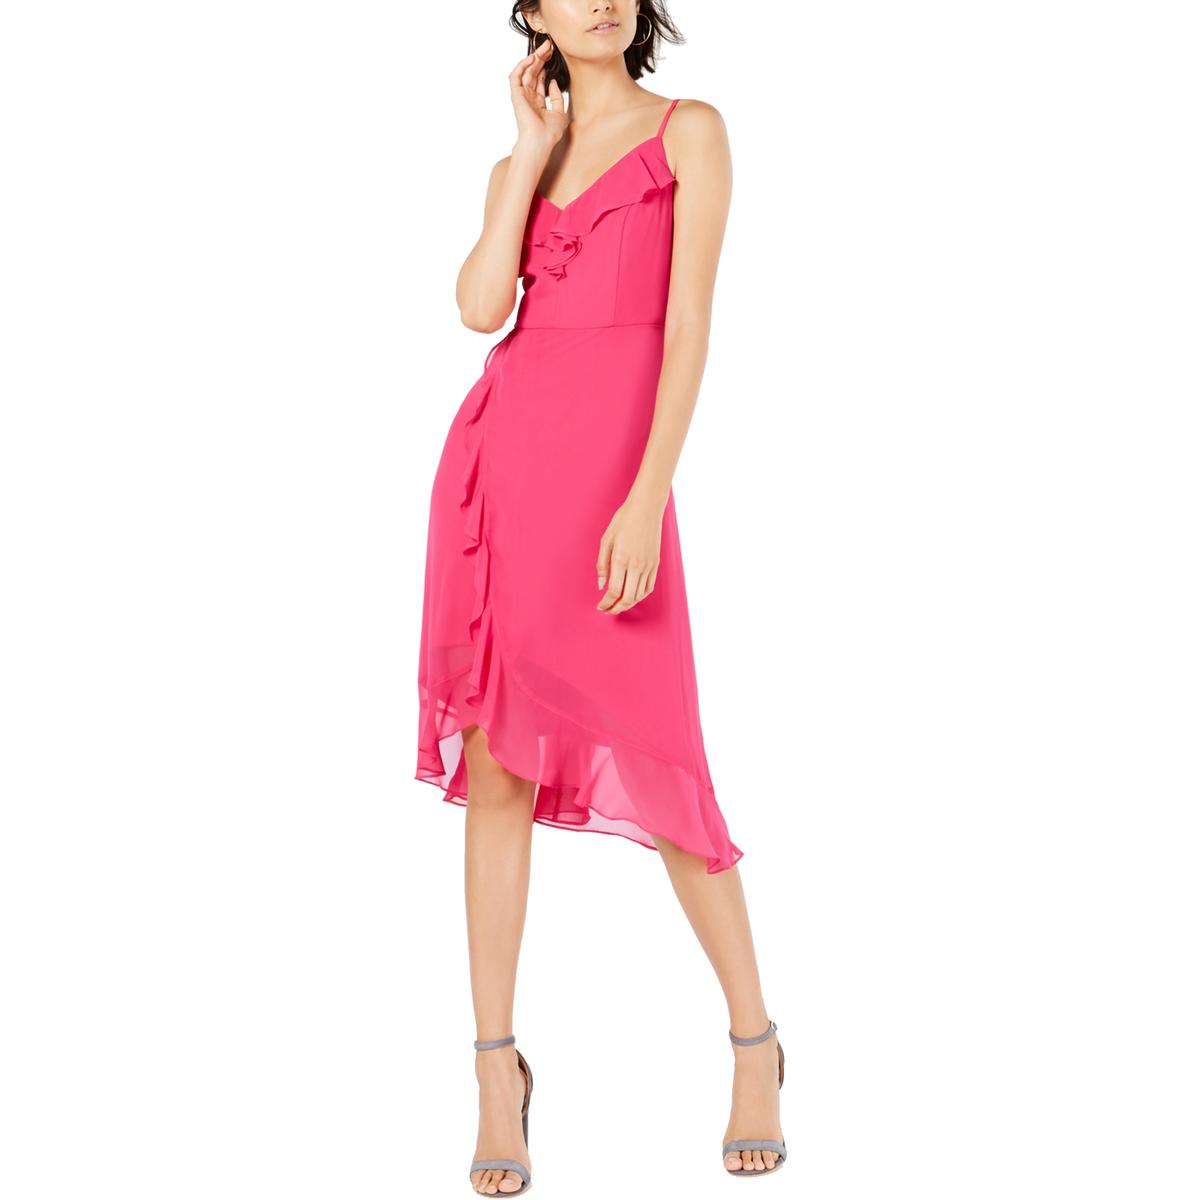 Kensie Dresses Womens Pink Ruffled Faux Wrap Midi Party Dress 2 BHFO ...